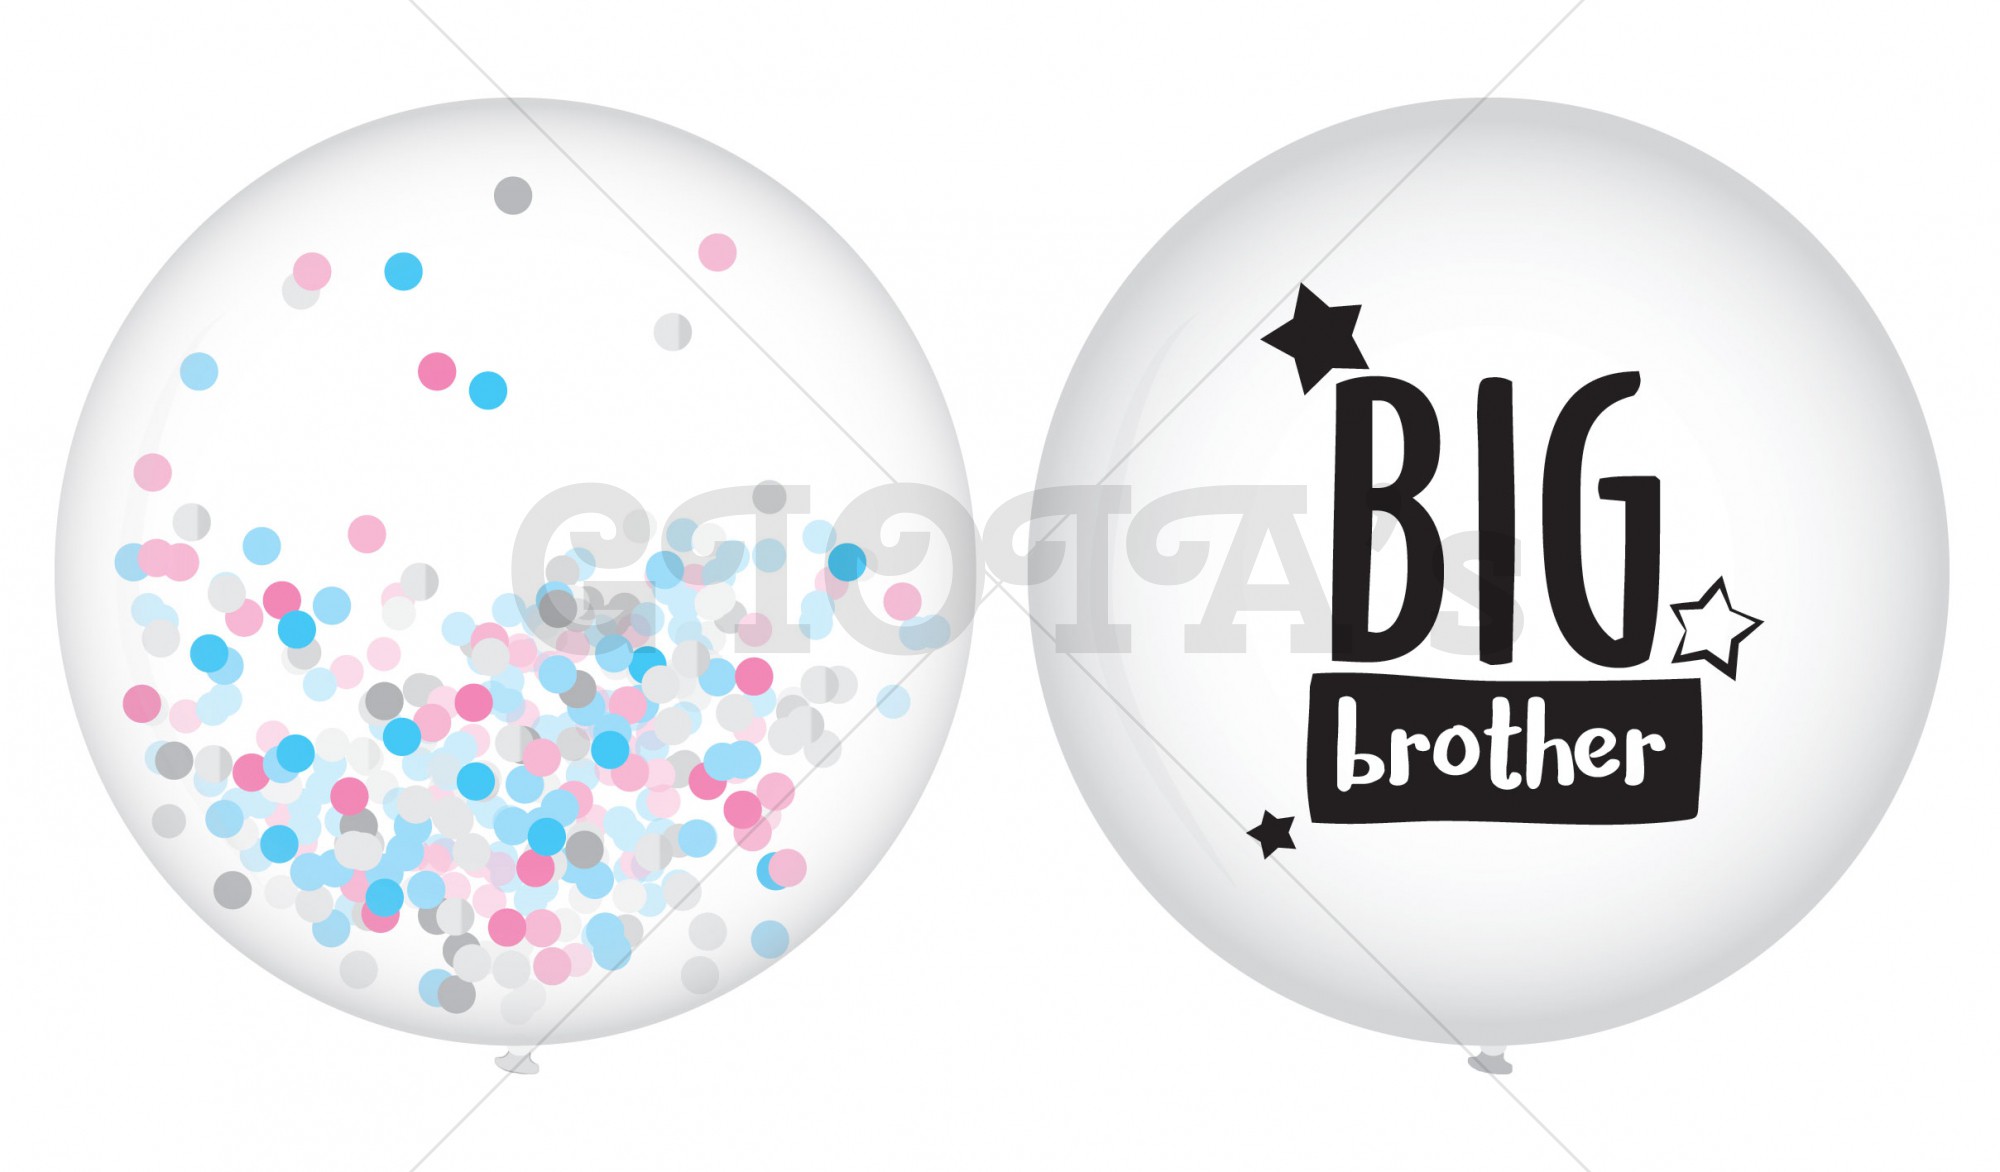 Gender reveal - Ballon BIG brother 2 stuks